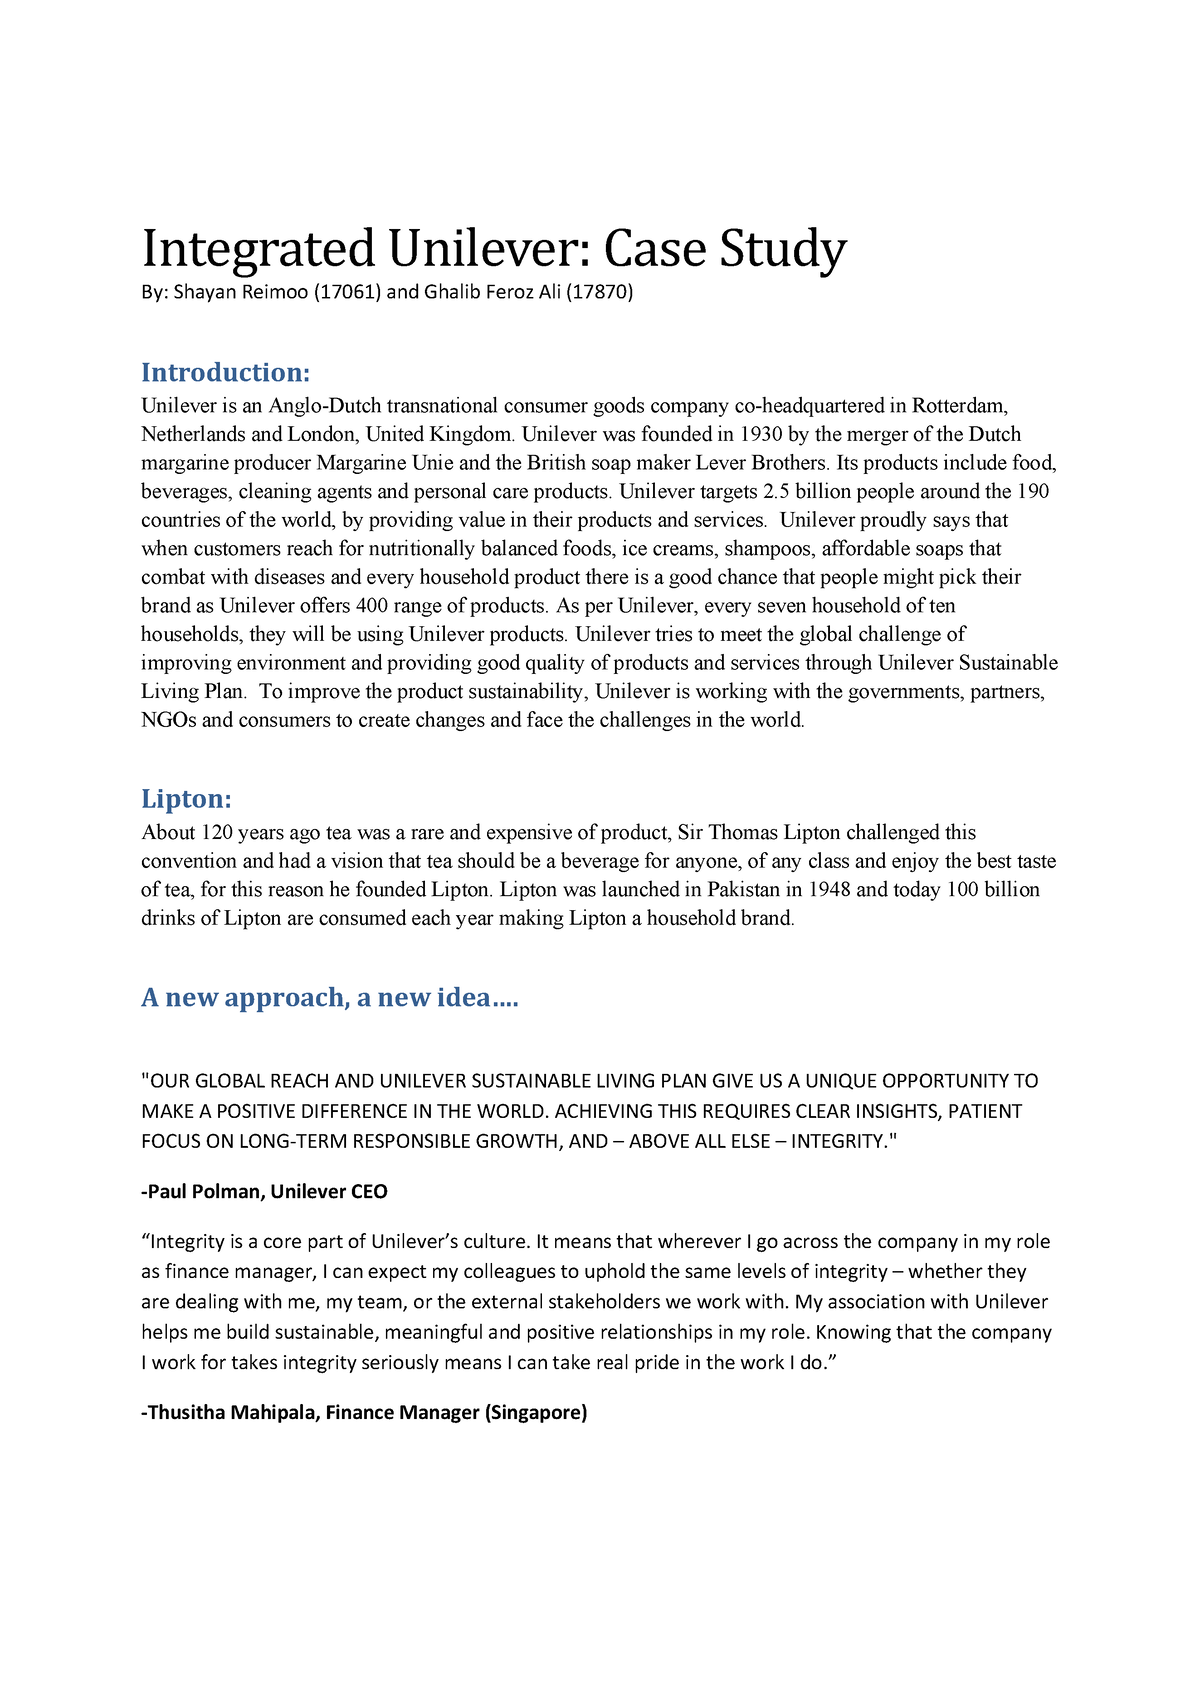 talent acquisition case study at unilever